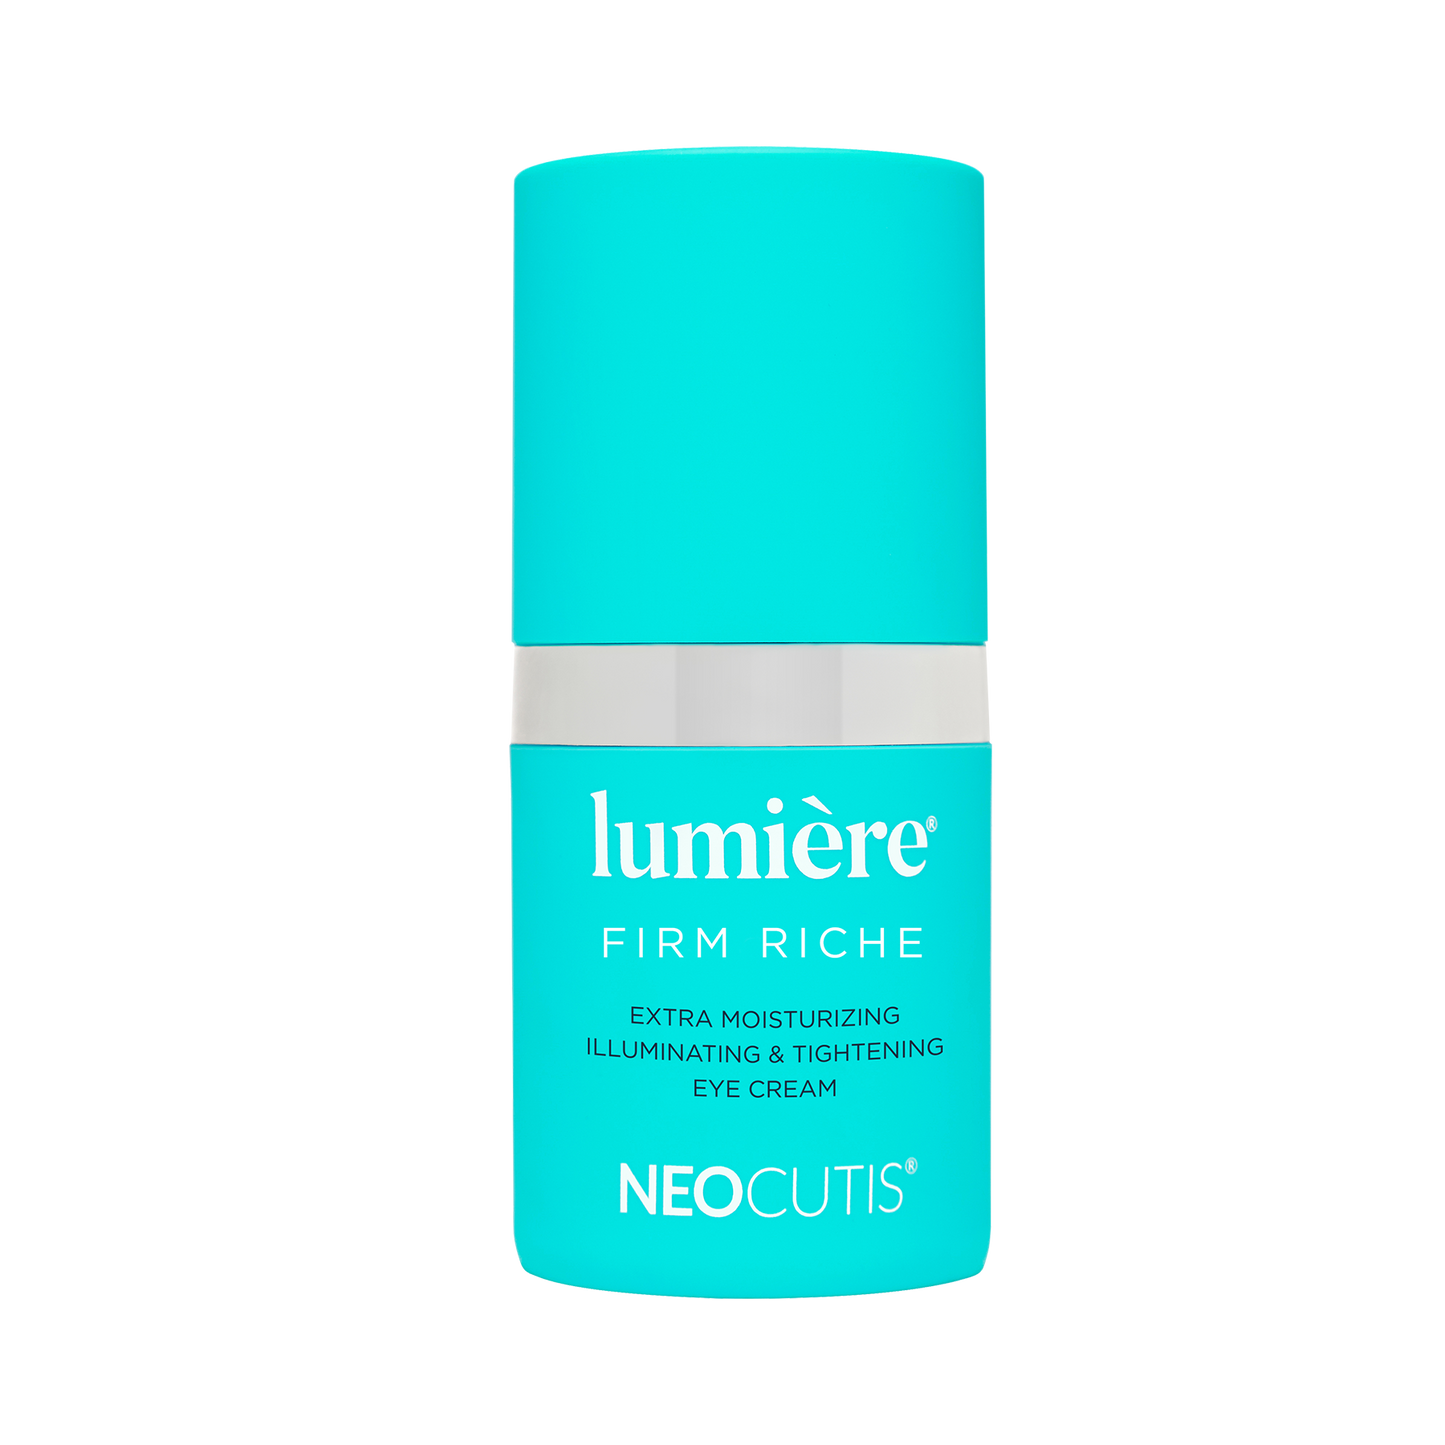 Neocutis Lumiere FIRM Riche Eye Cream